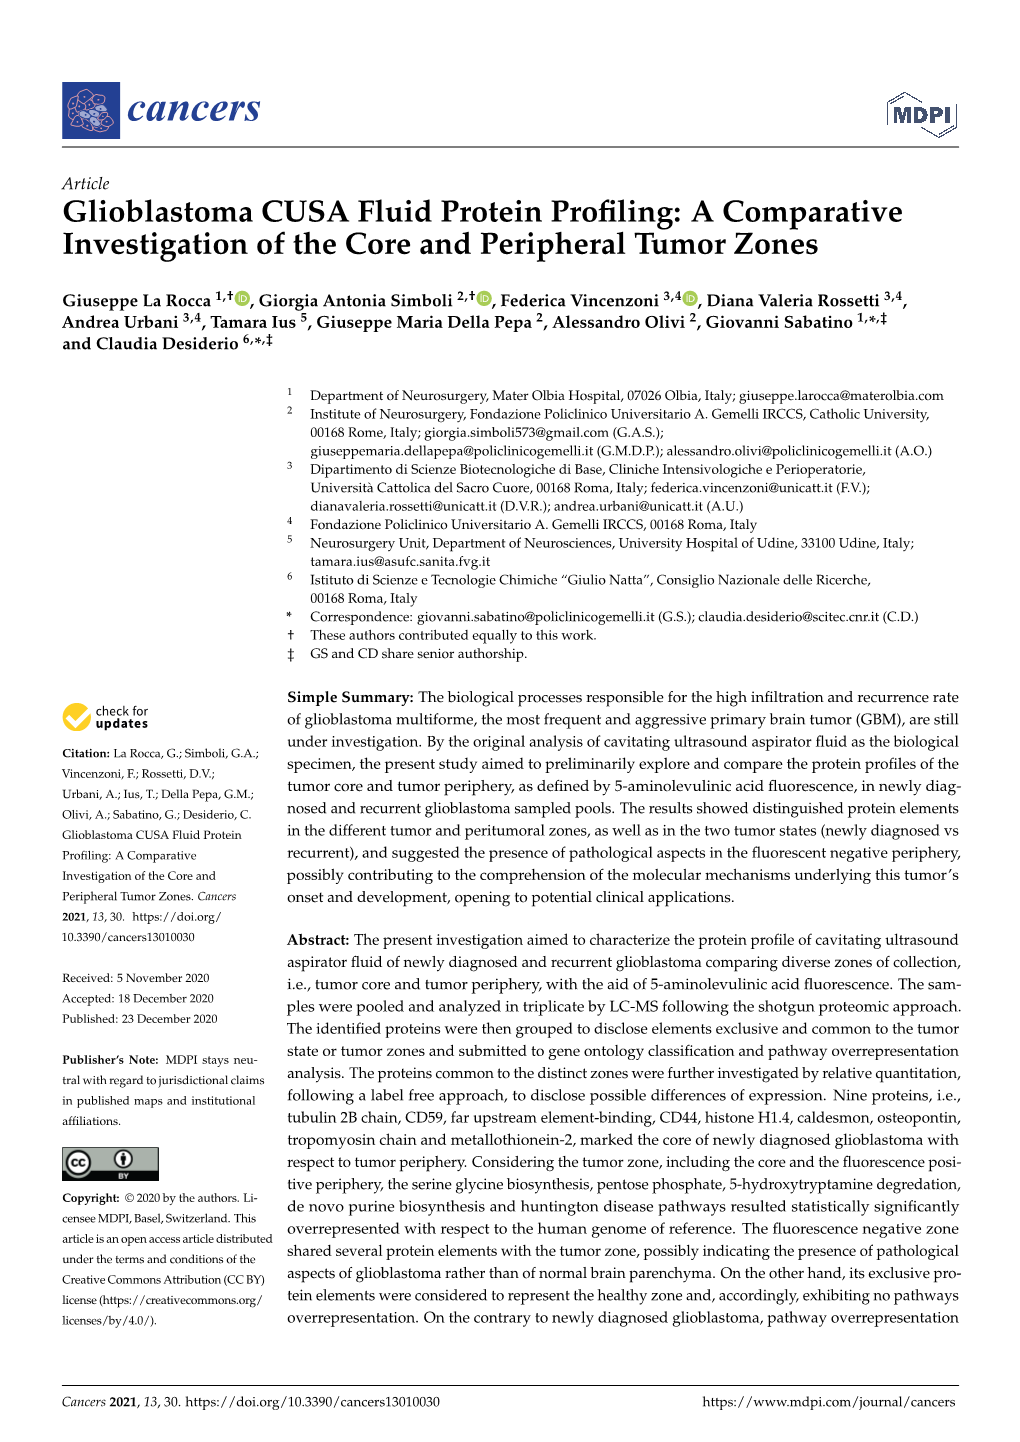 Glioblastoma CUSA Fluid Protein Profiling: a Comparative Investigation of the Core and Peripheral Tumor Zones